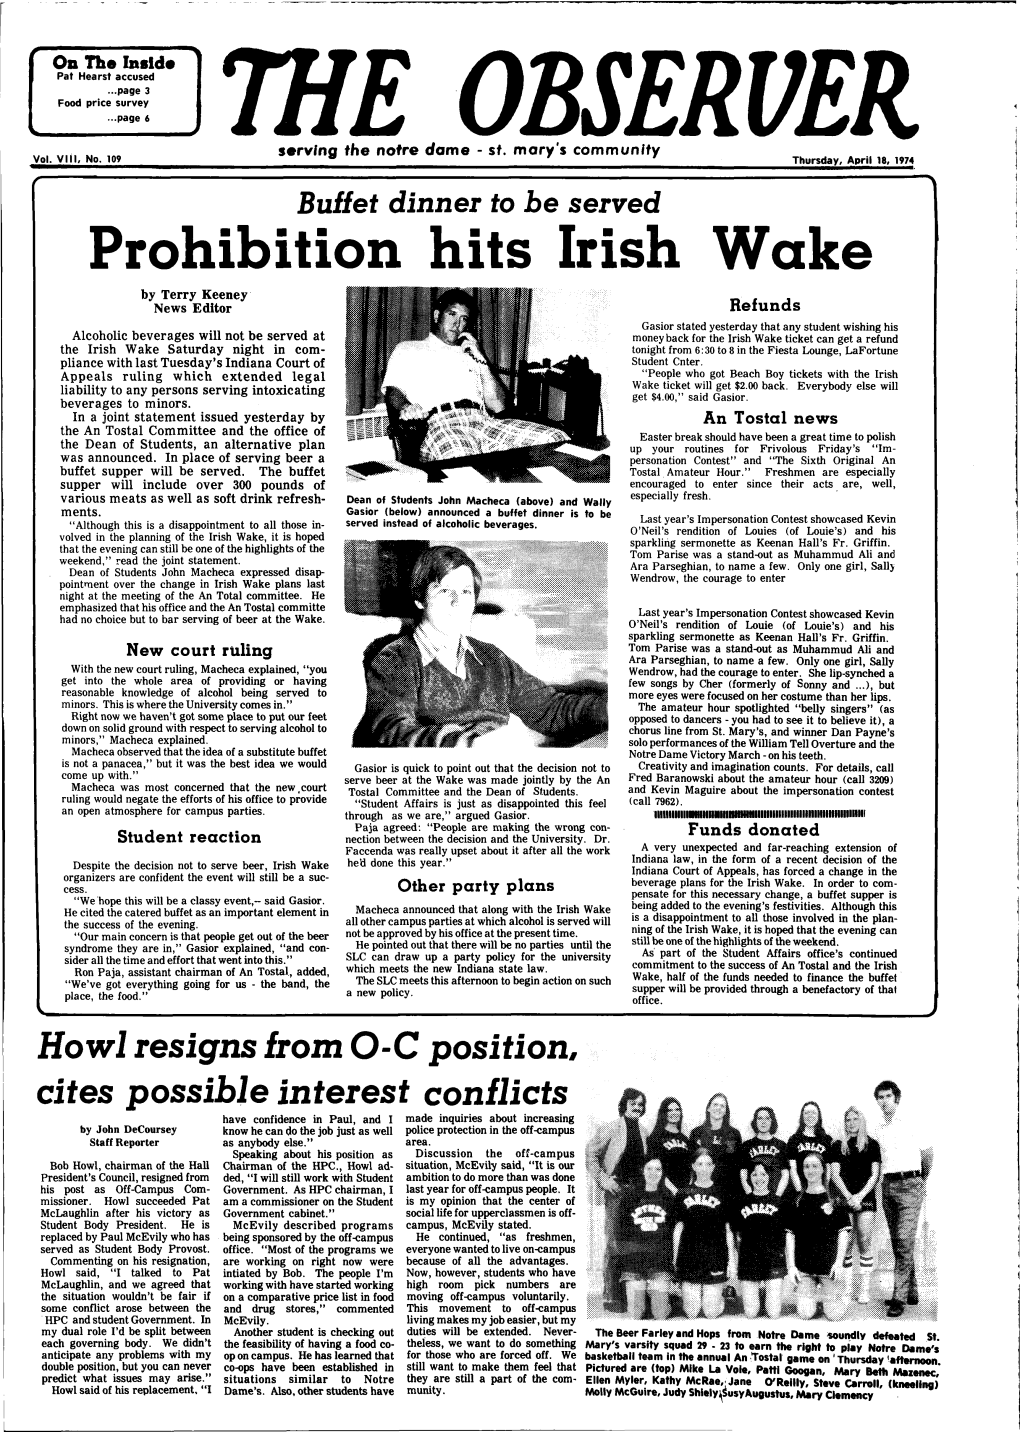 Prohibition Hits Irish Wake